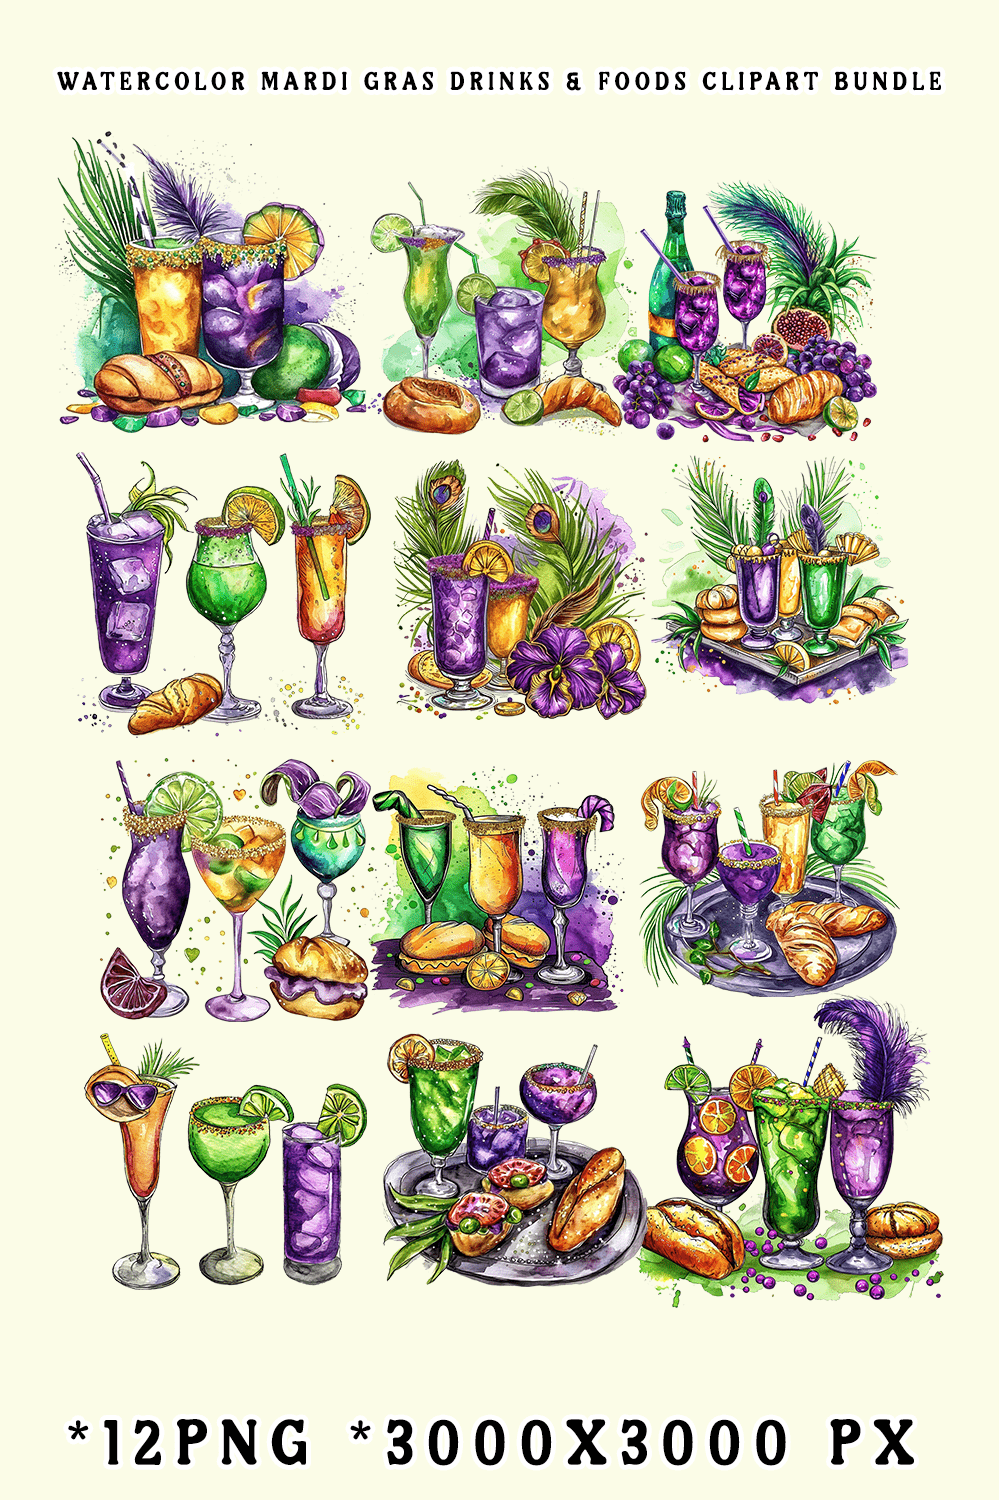 Watercolor Mardi Gras Drinks & Foods Clipart Bundle pinterest preview image.